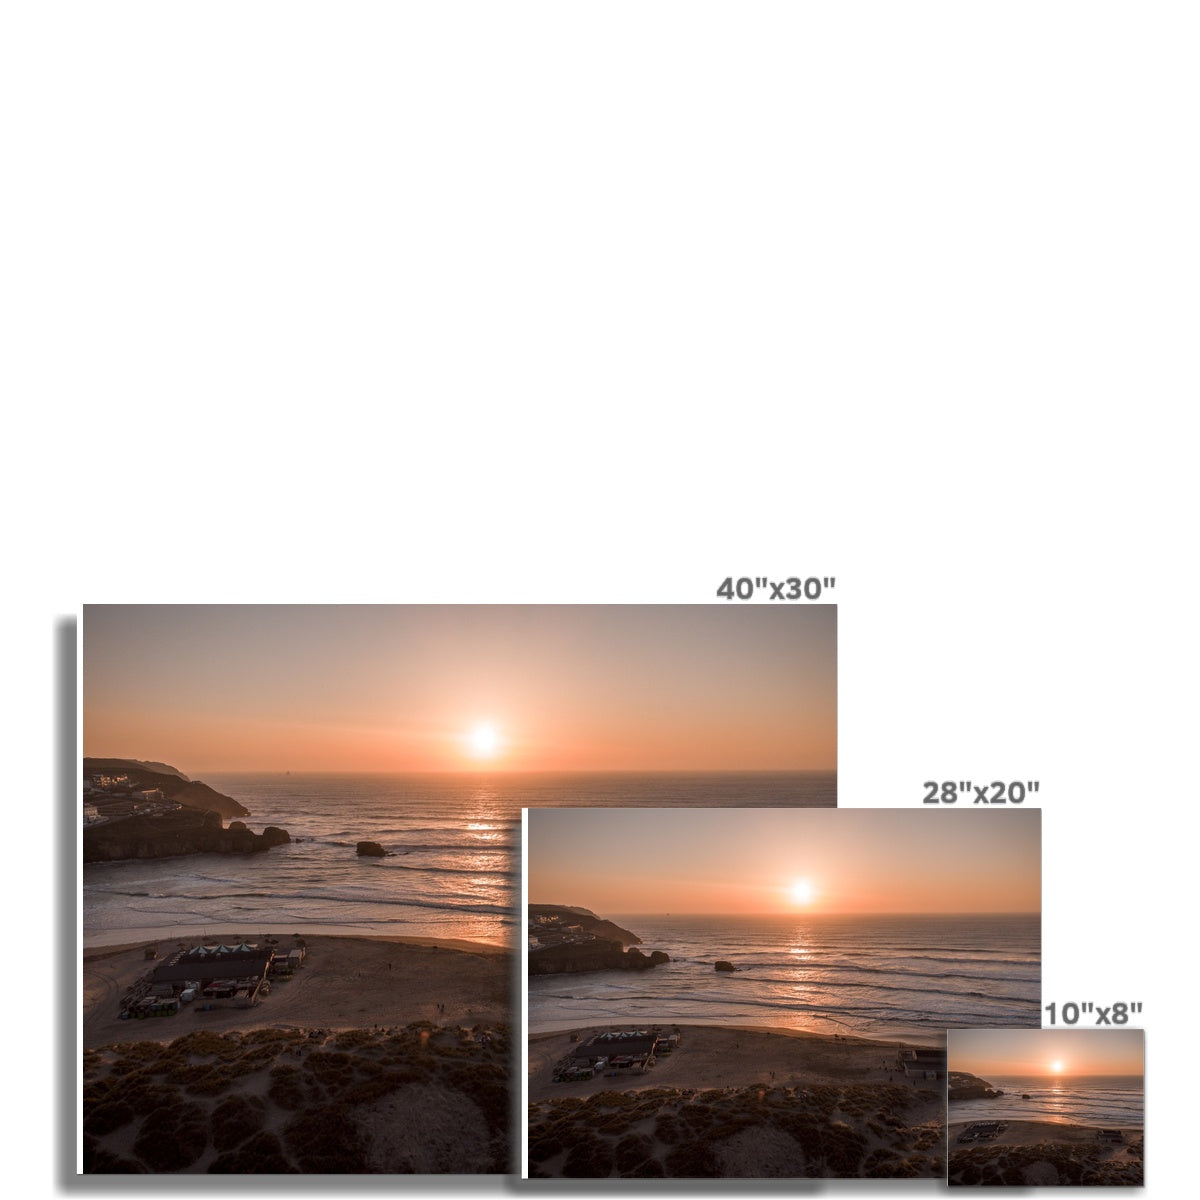 orange sunset perranporth picture sizes